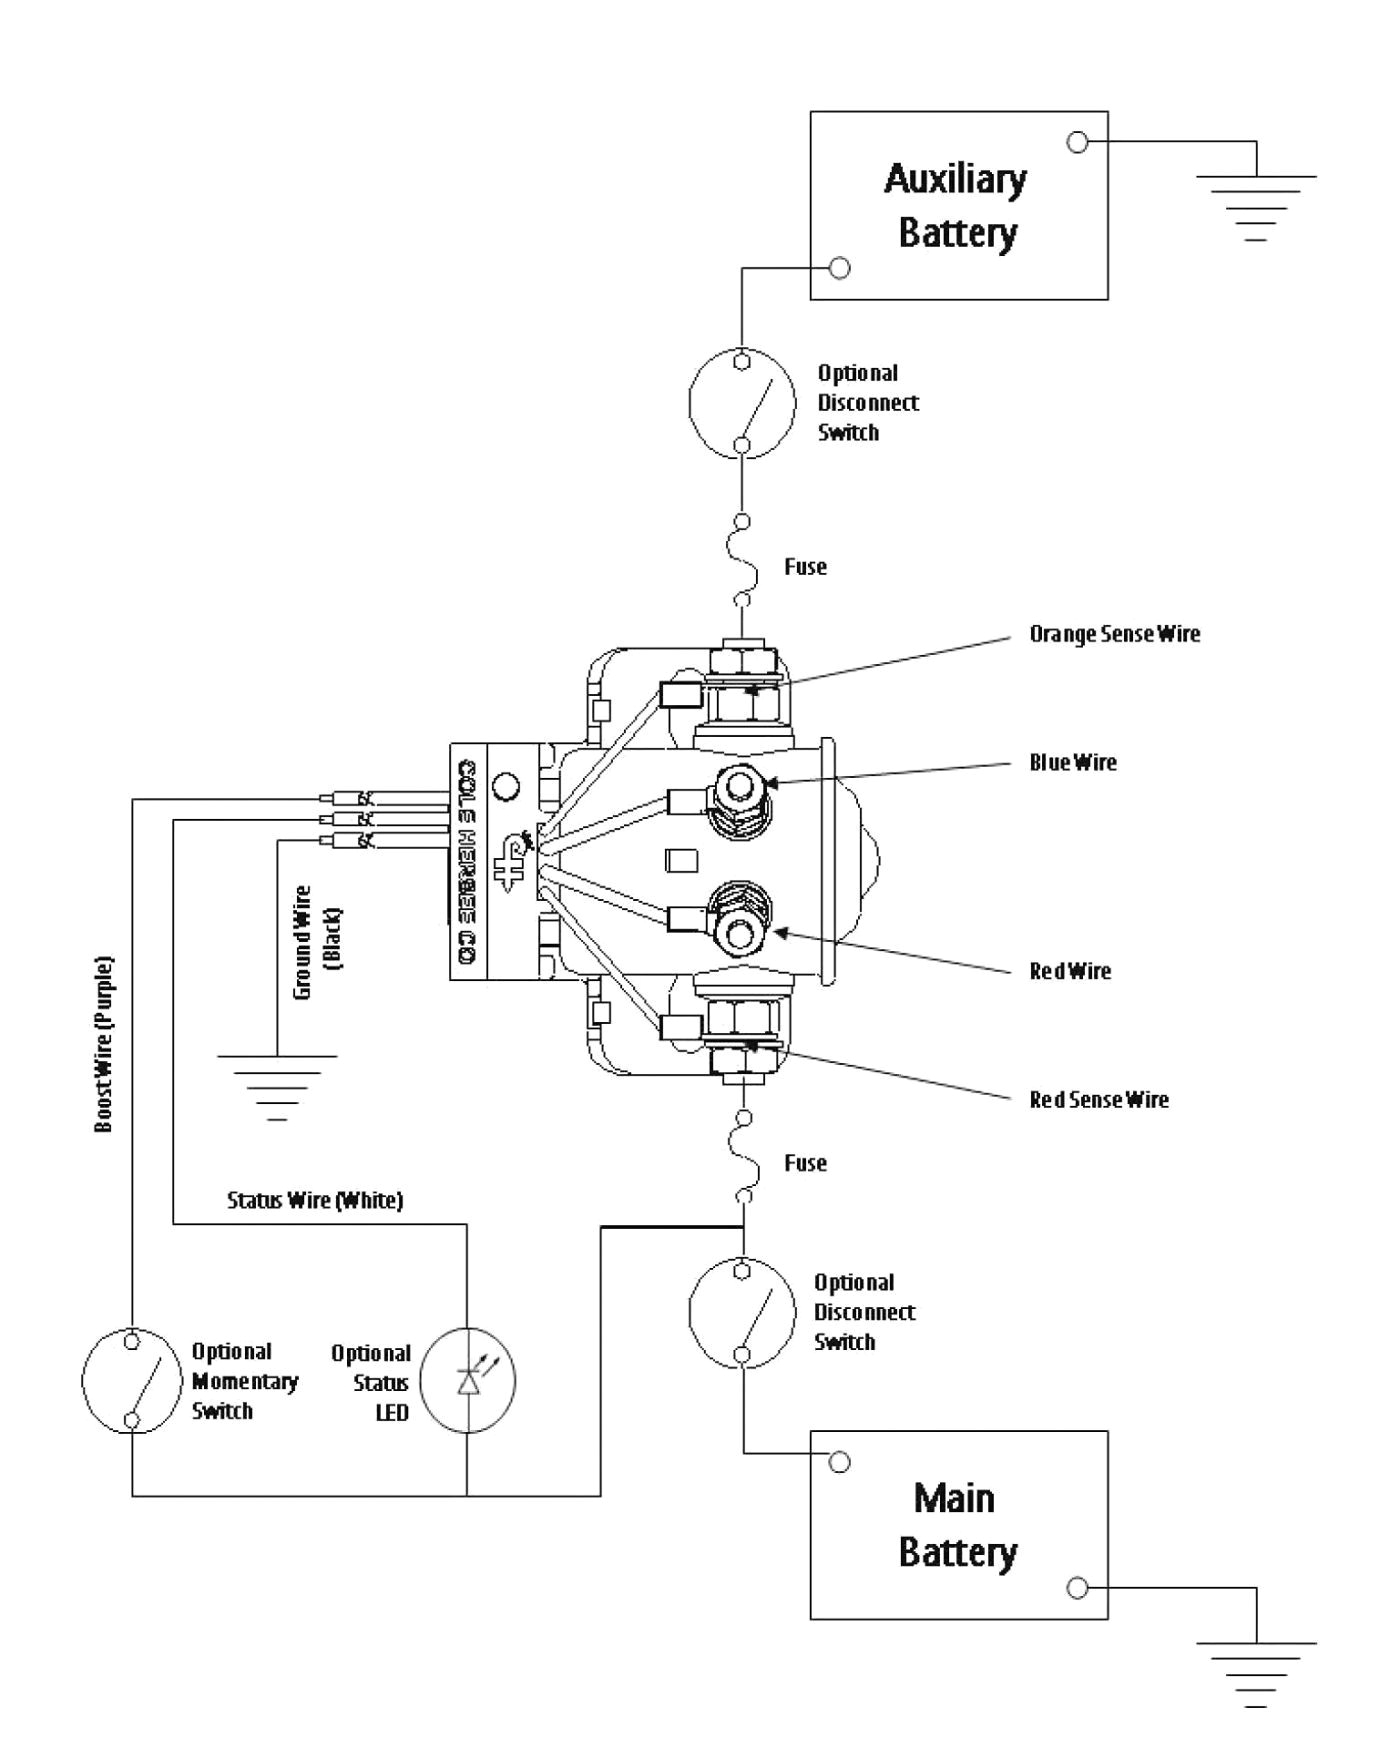 st85 solenoid wiring diagram wiring diagram rules st85 solenoid wiring diagram